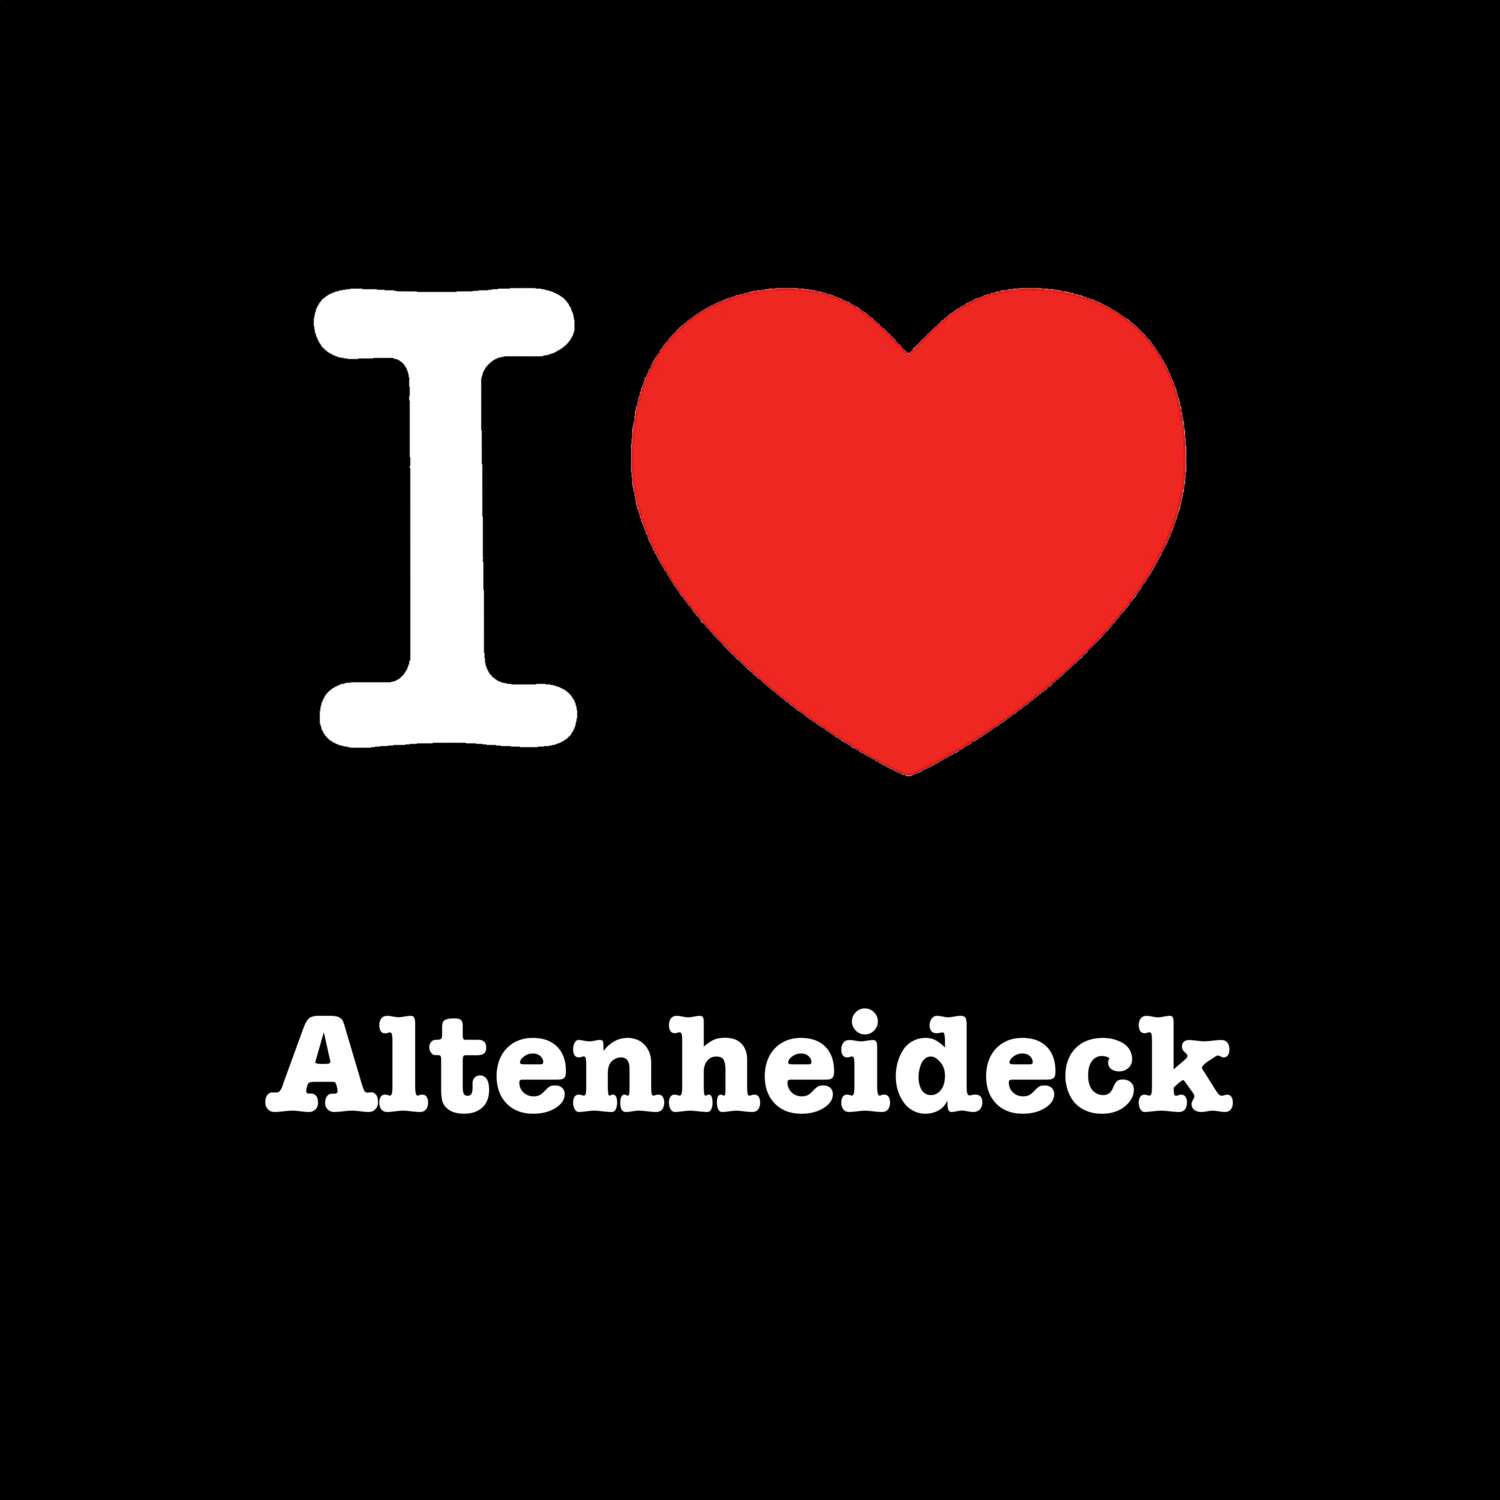 Altenheideck T-Shirt »I love«